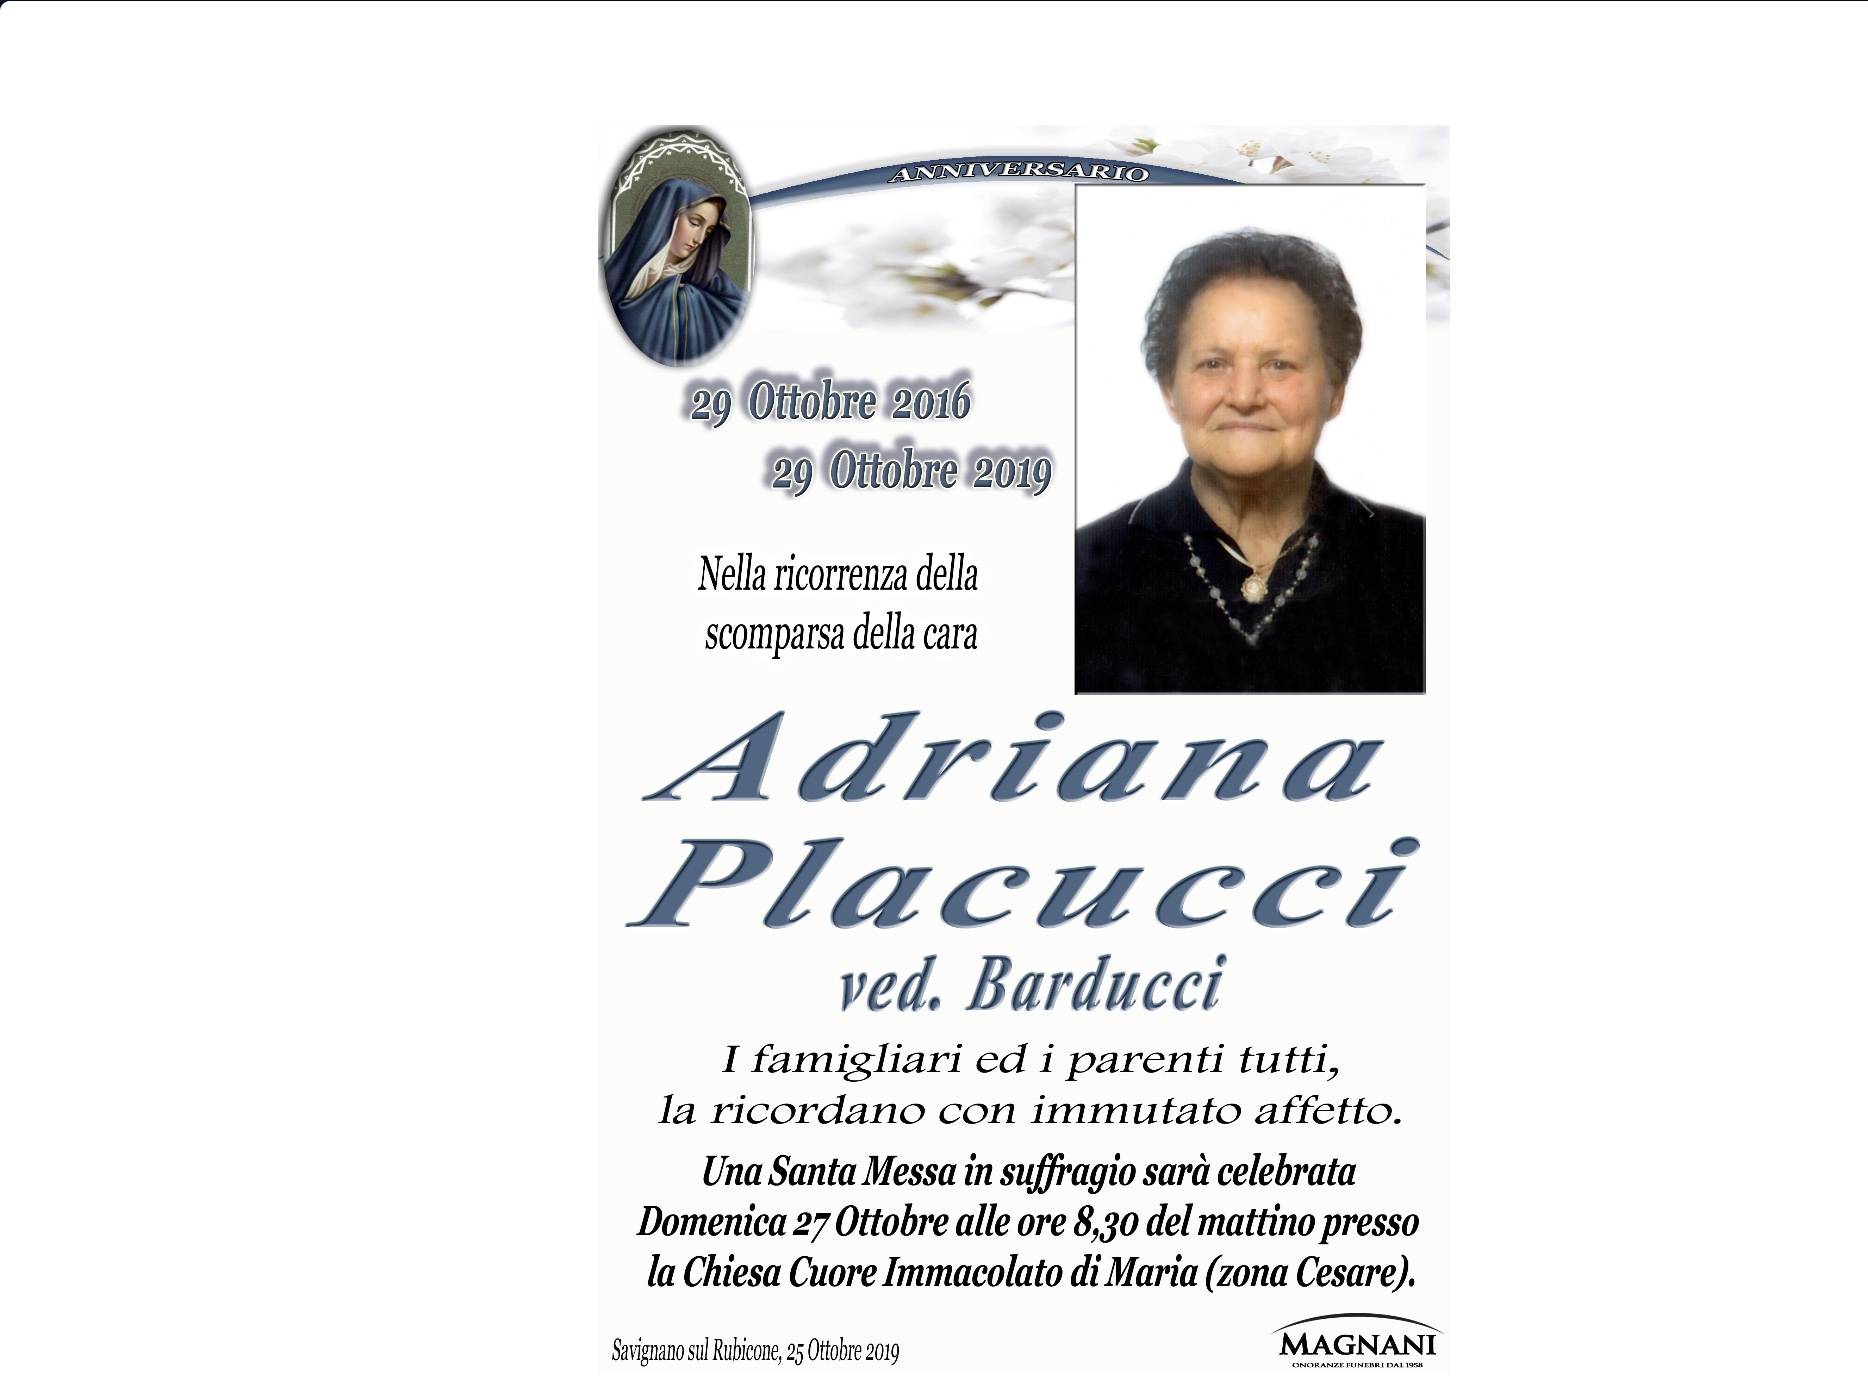 Adriana Placucci